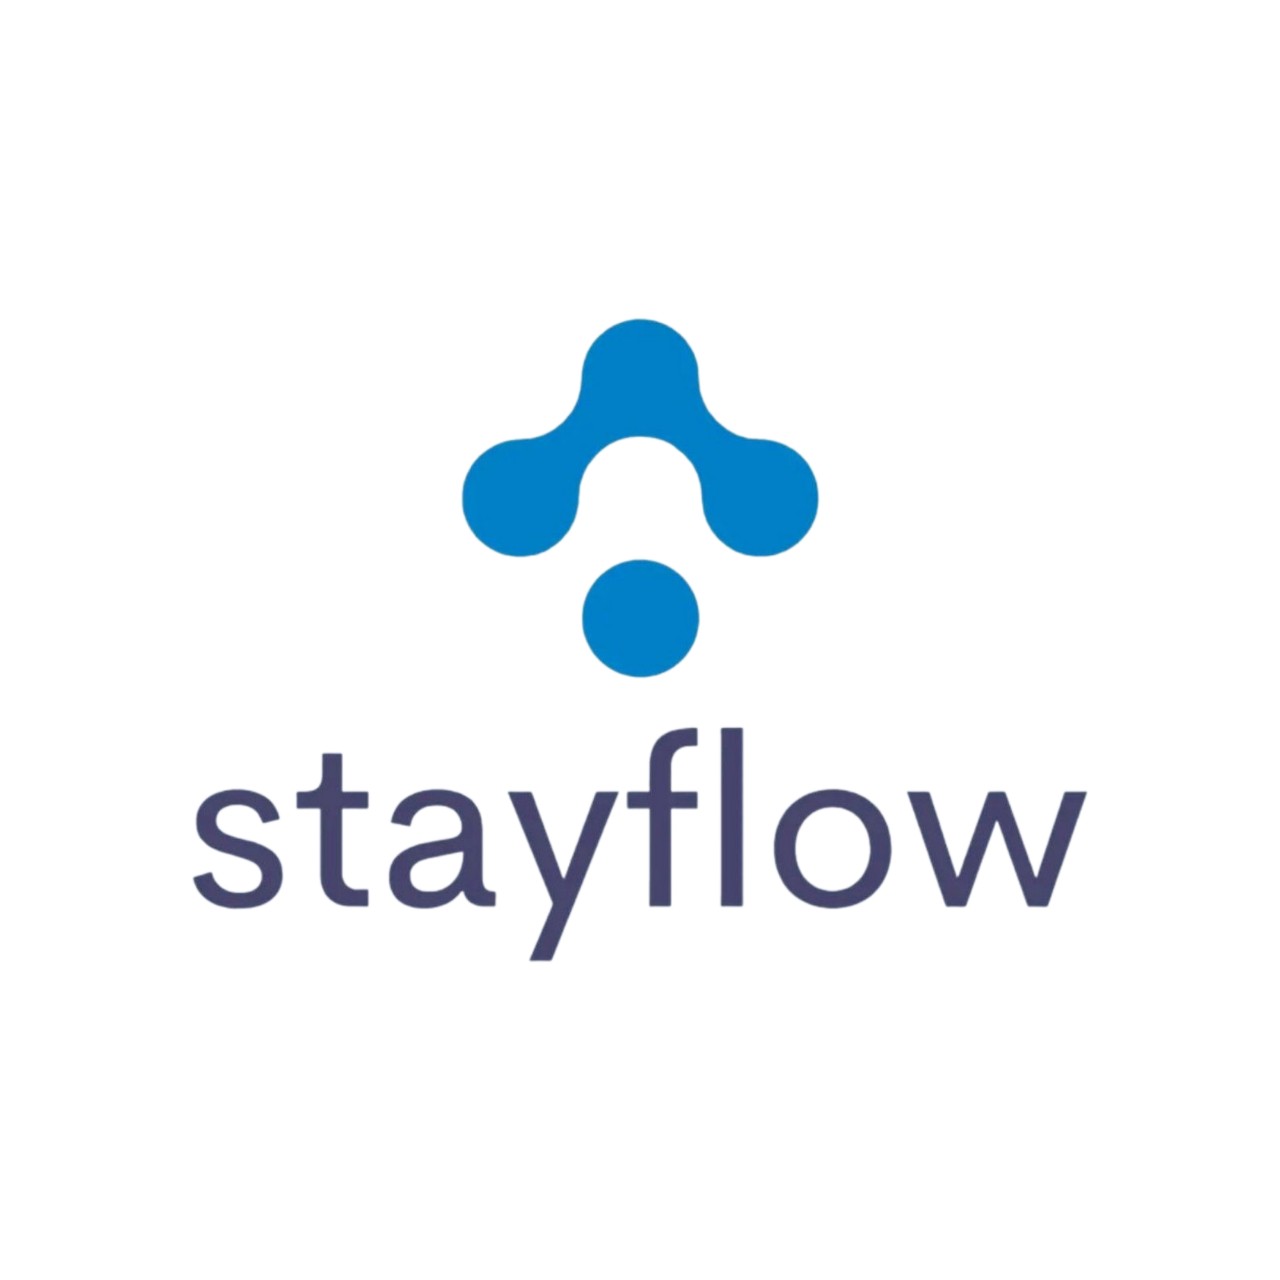 Stayflow Consultancy Co., Ltd